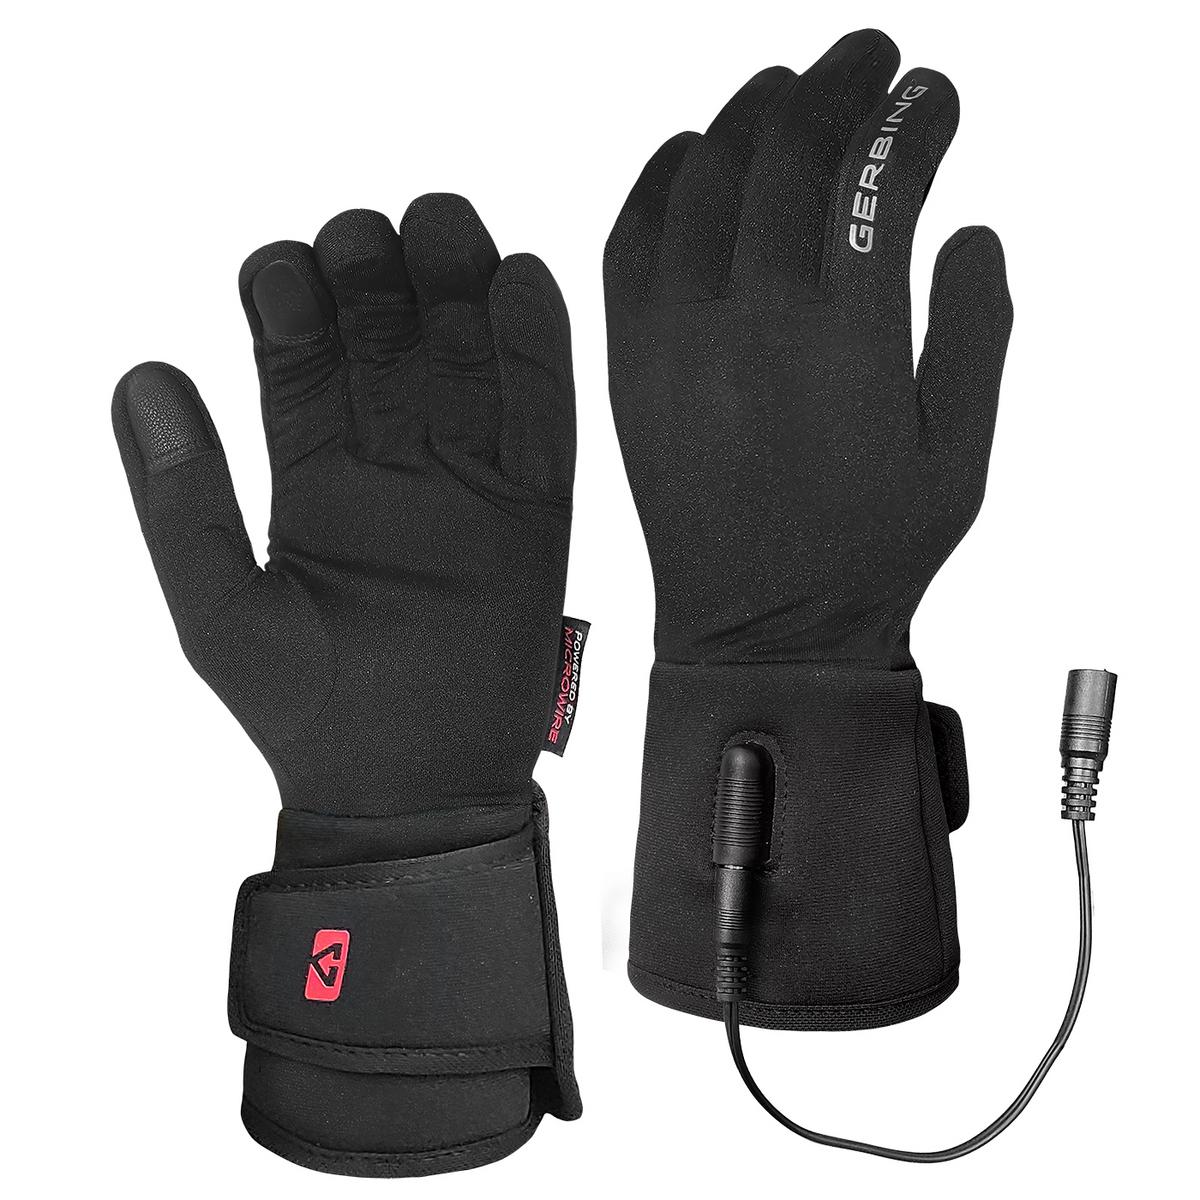 Gerbing 12V Heated Glove Liners - Heated